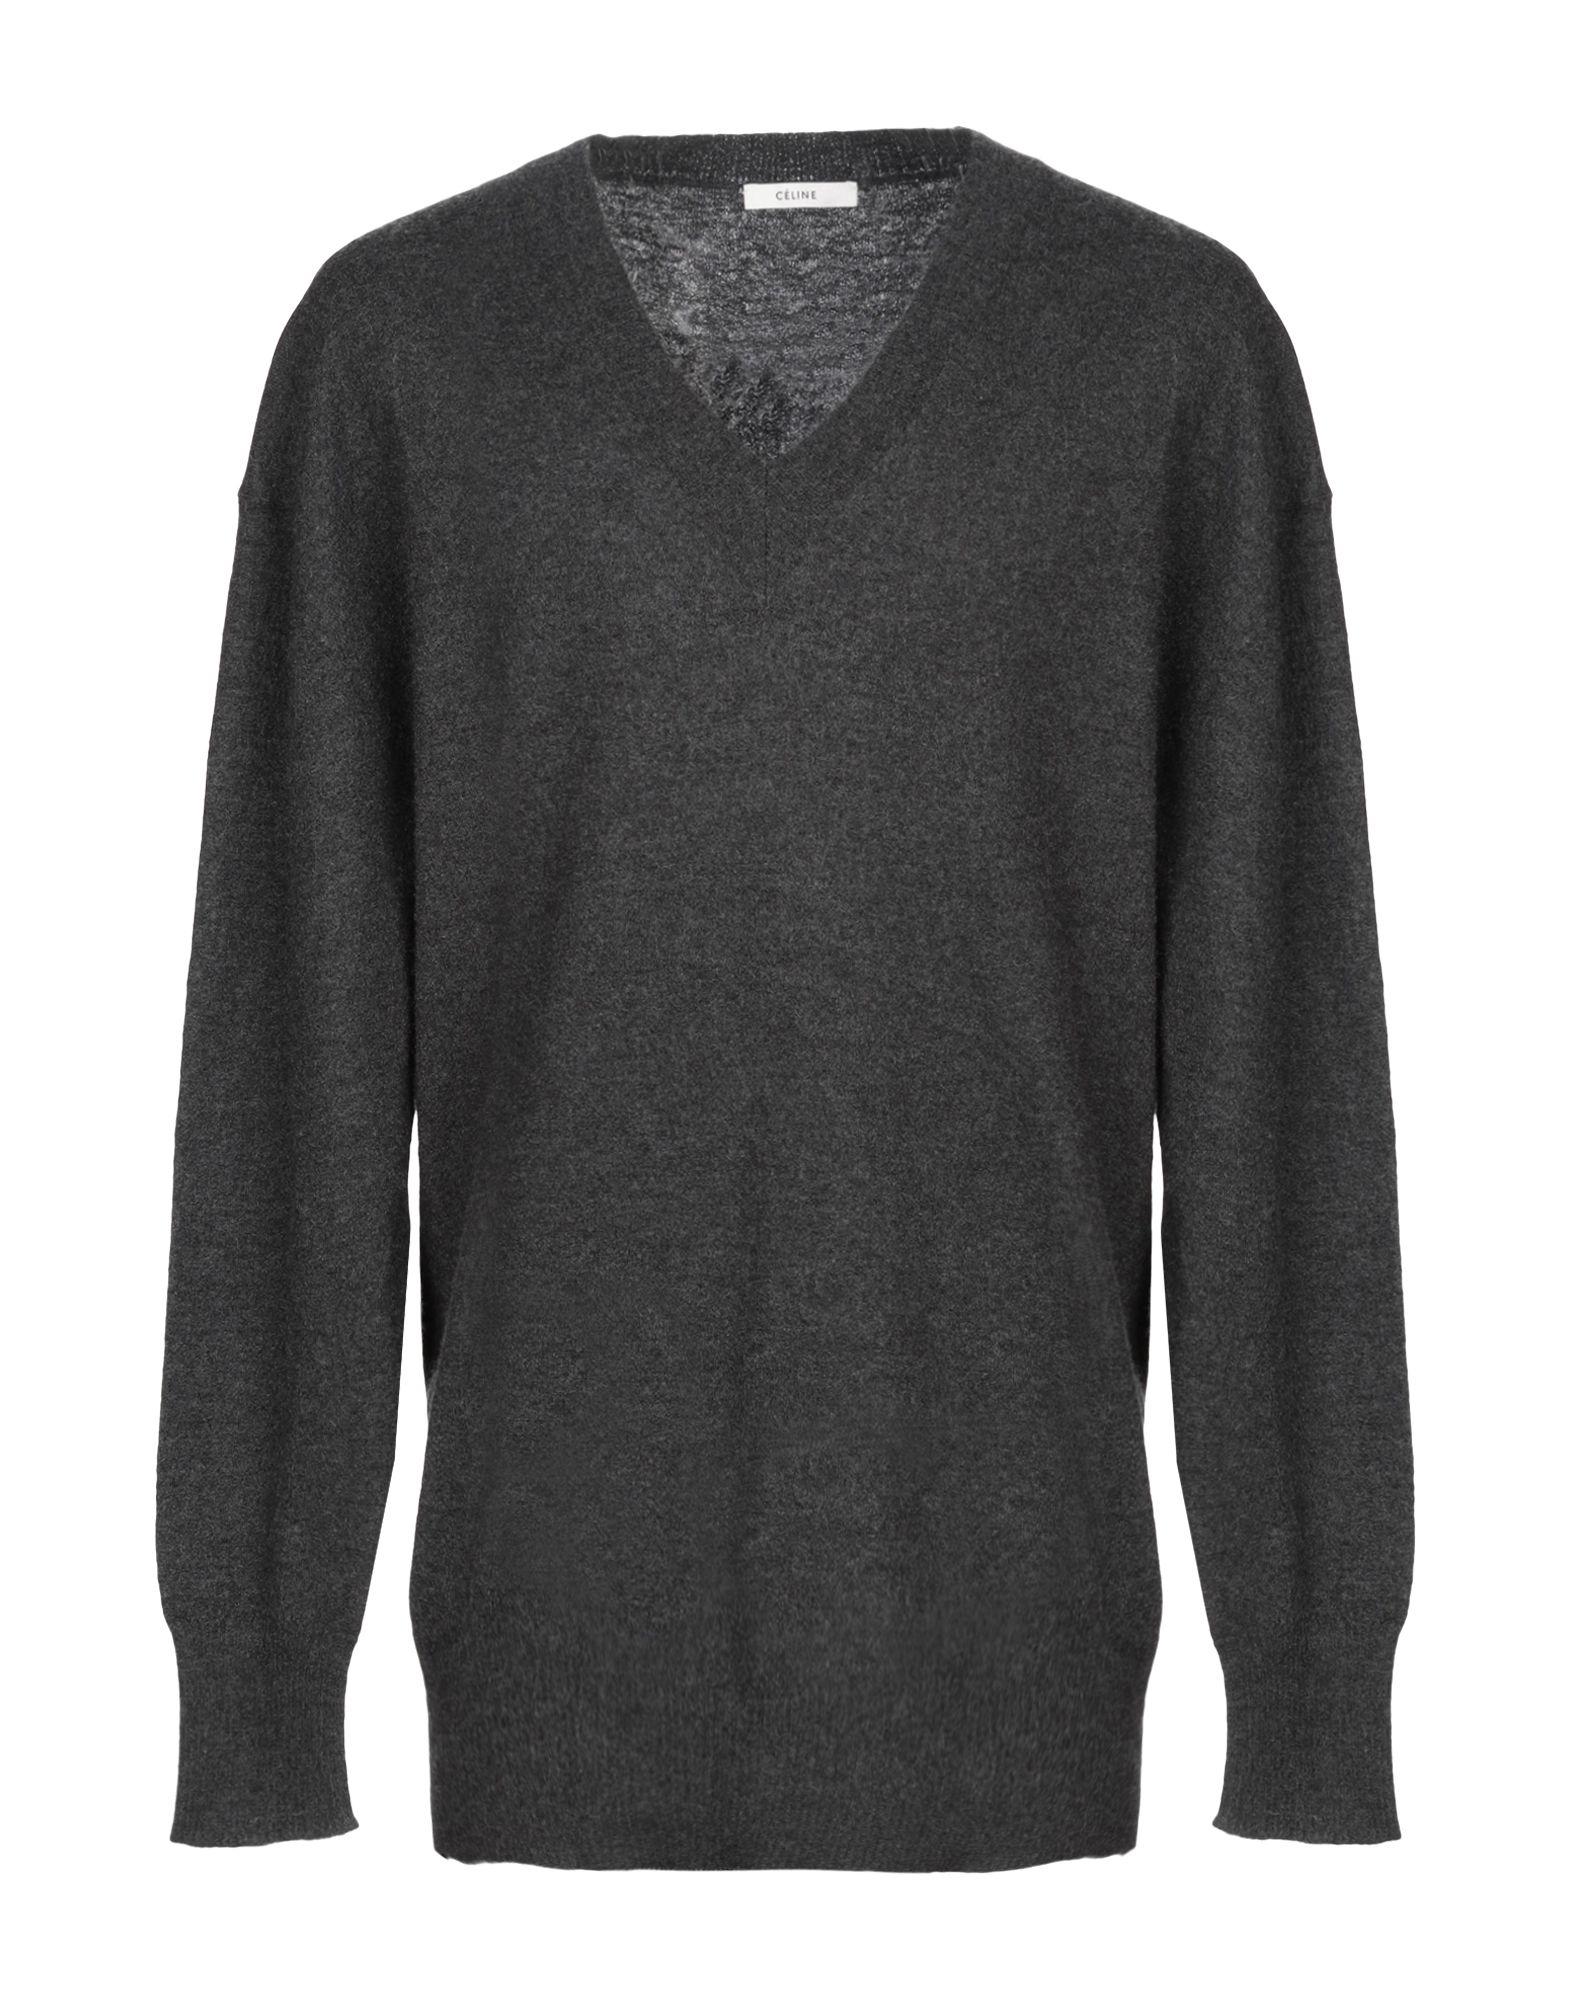 Celine Cashmere Sweater in Steel Grey (Gray) for Men - Lyst